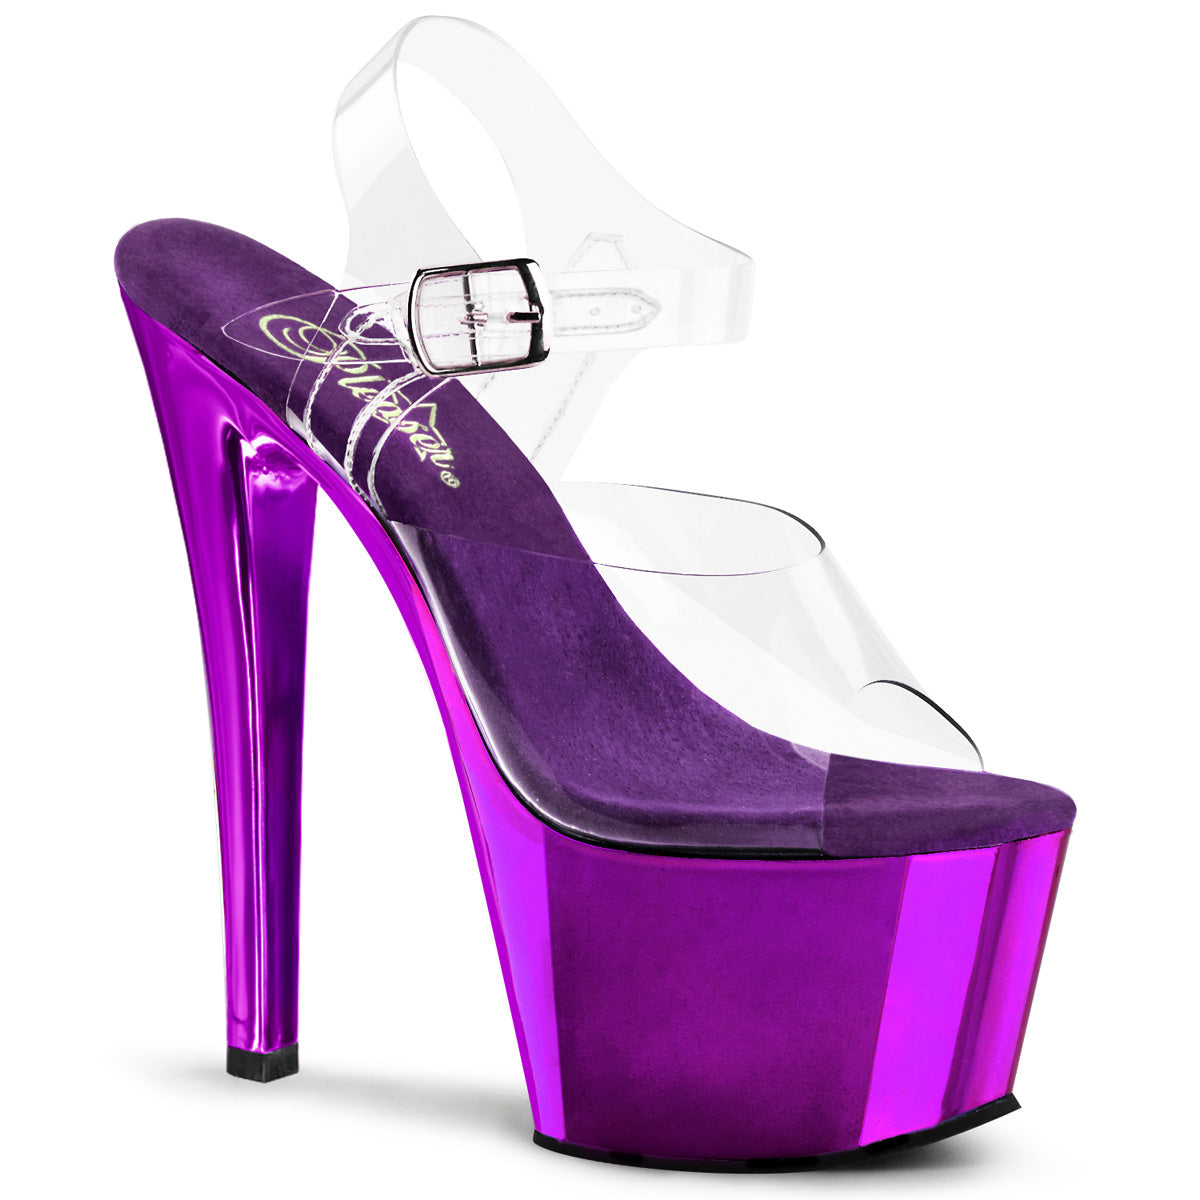 SKY-308 7" Heel Clear Purple Chrome Pole Dancer Platforms-Pleaser- Sexy Shoes